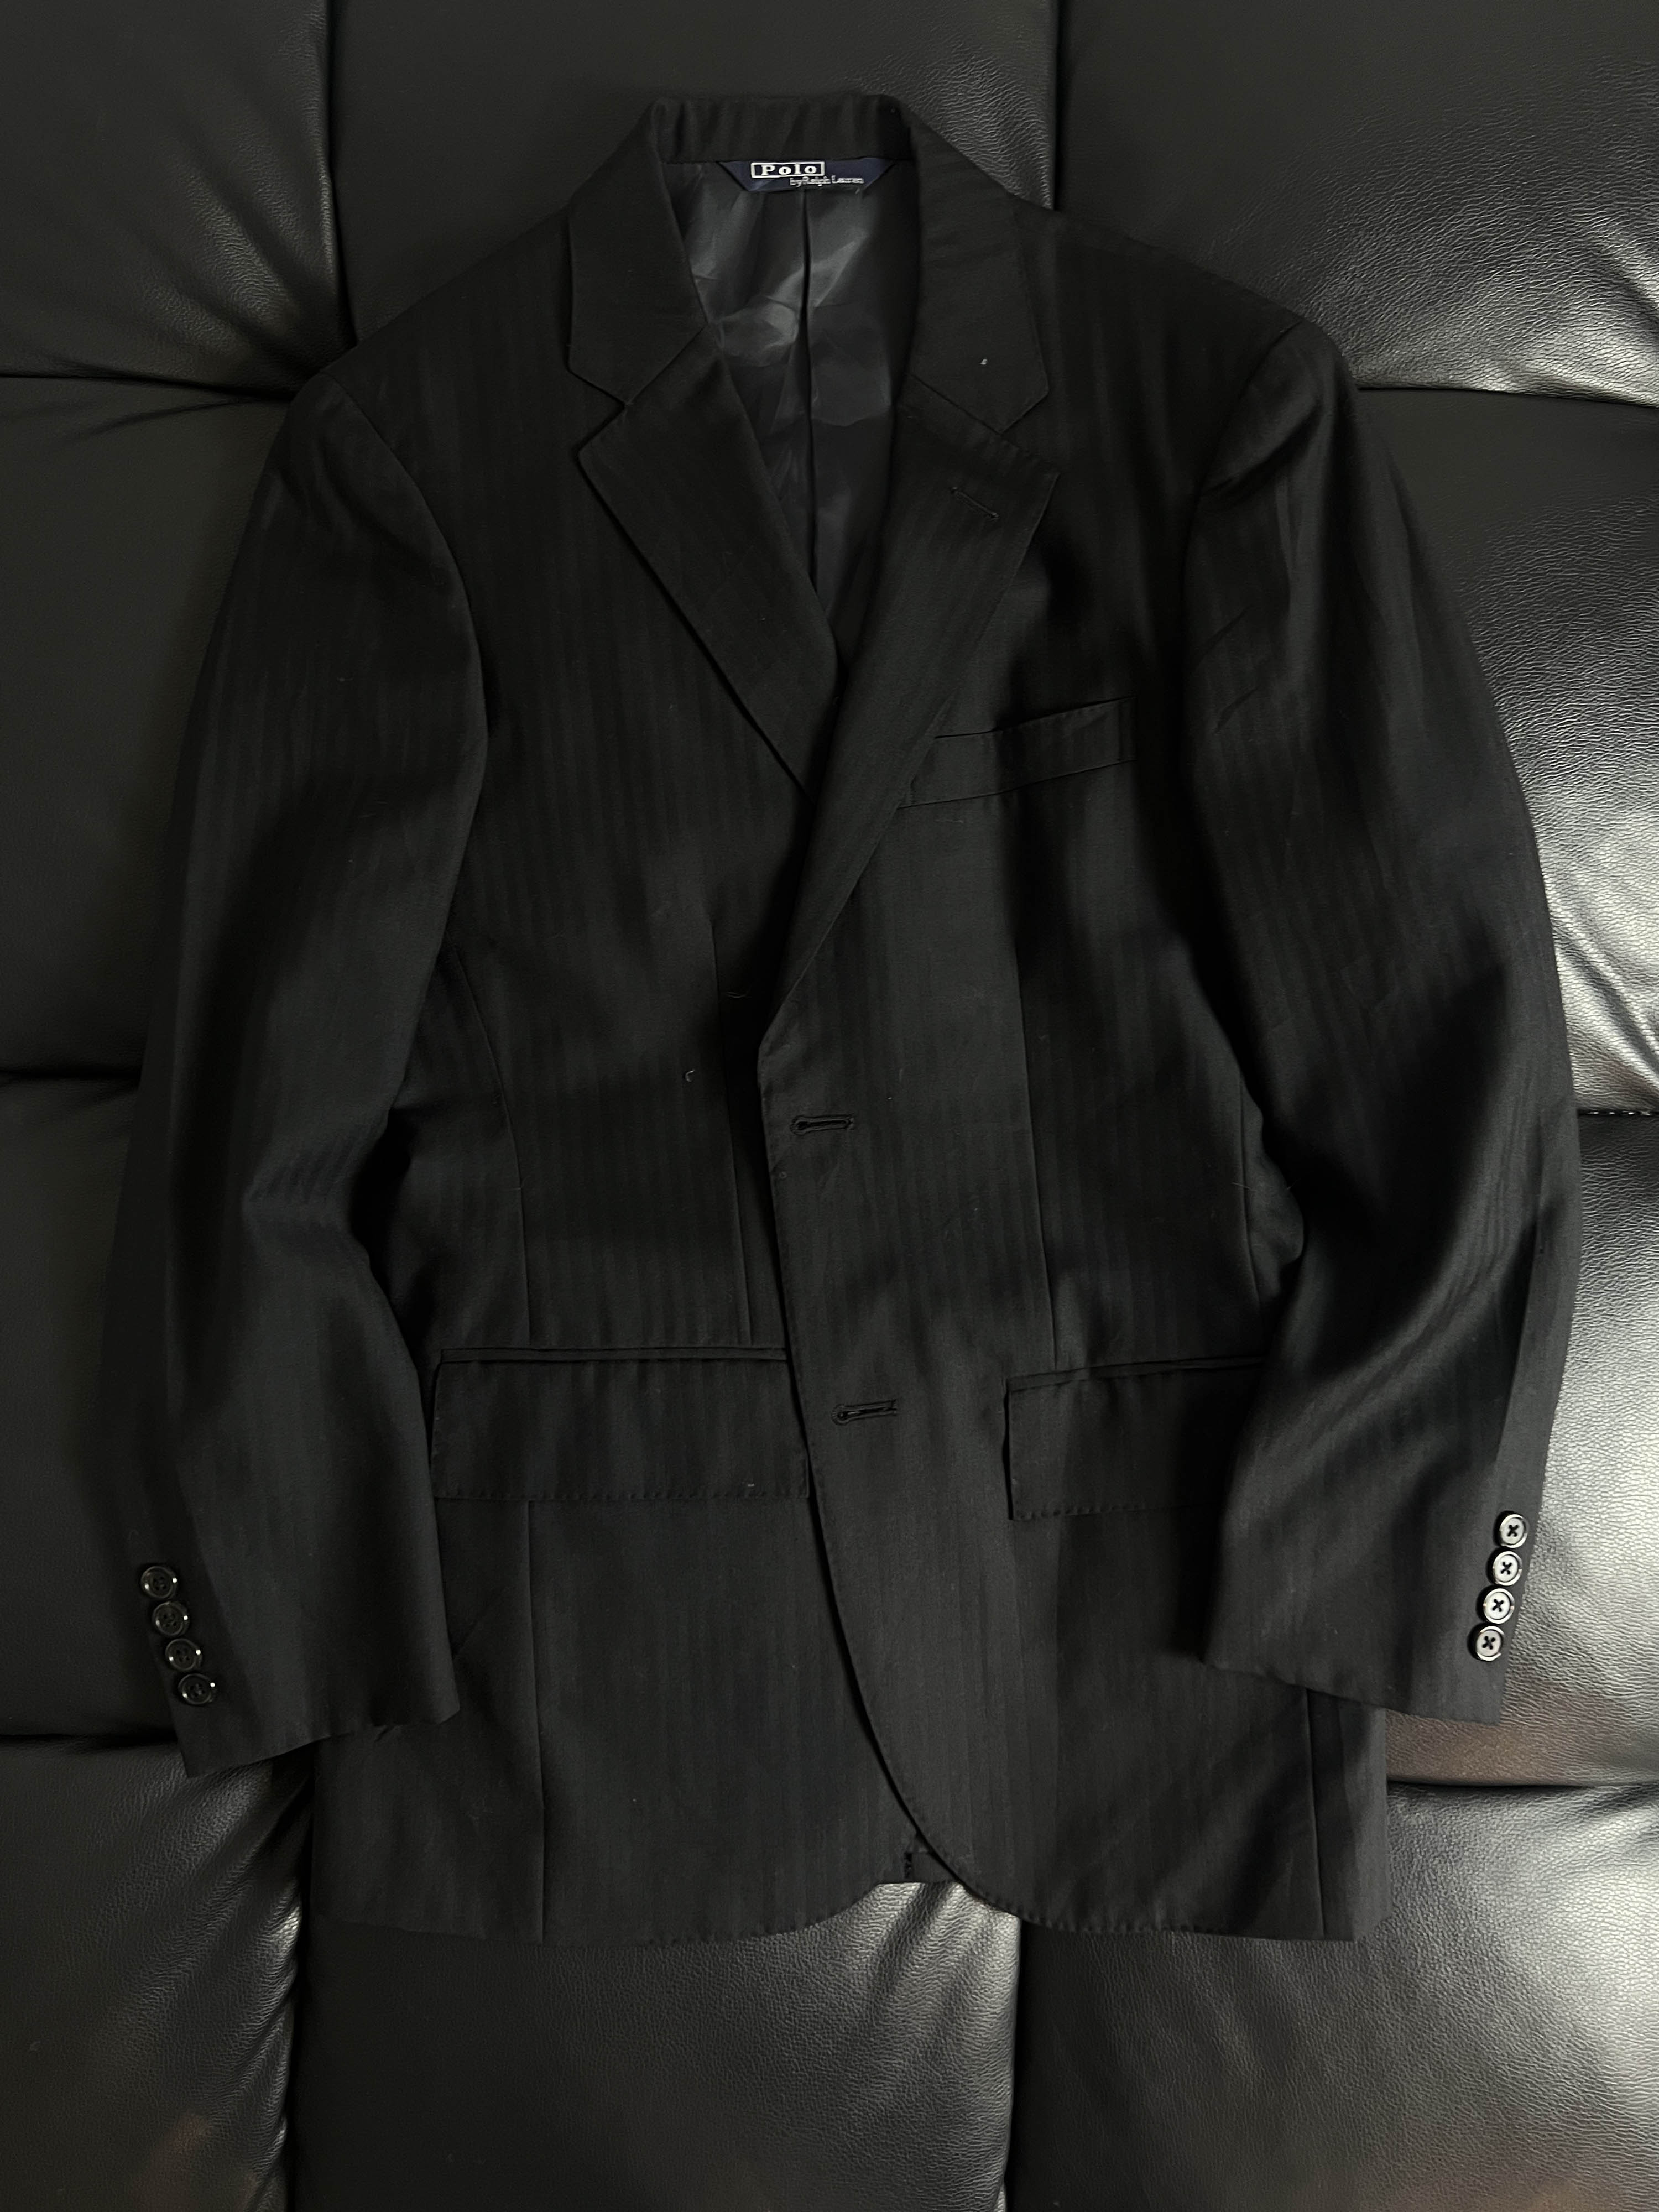 Polo by Ralph lauren stripe black jacket